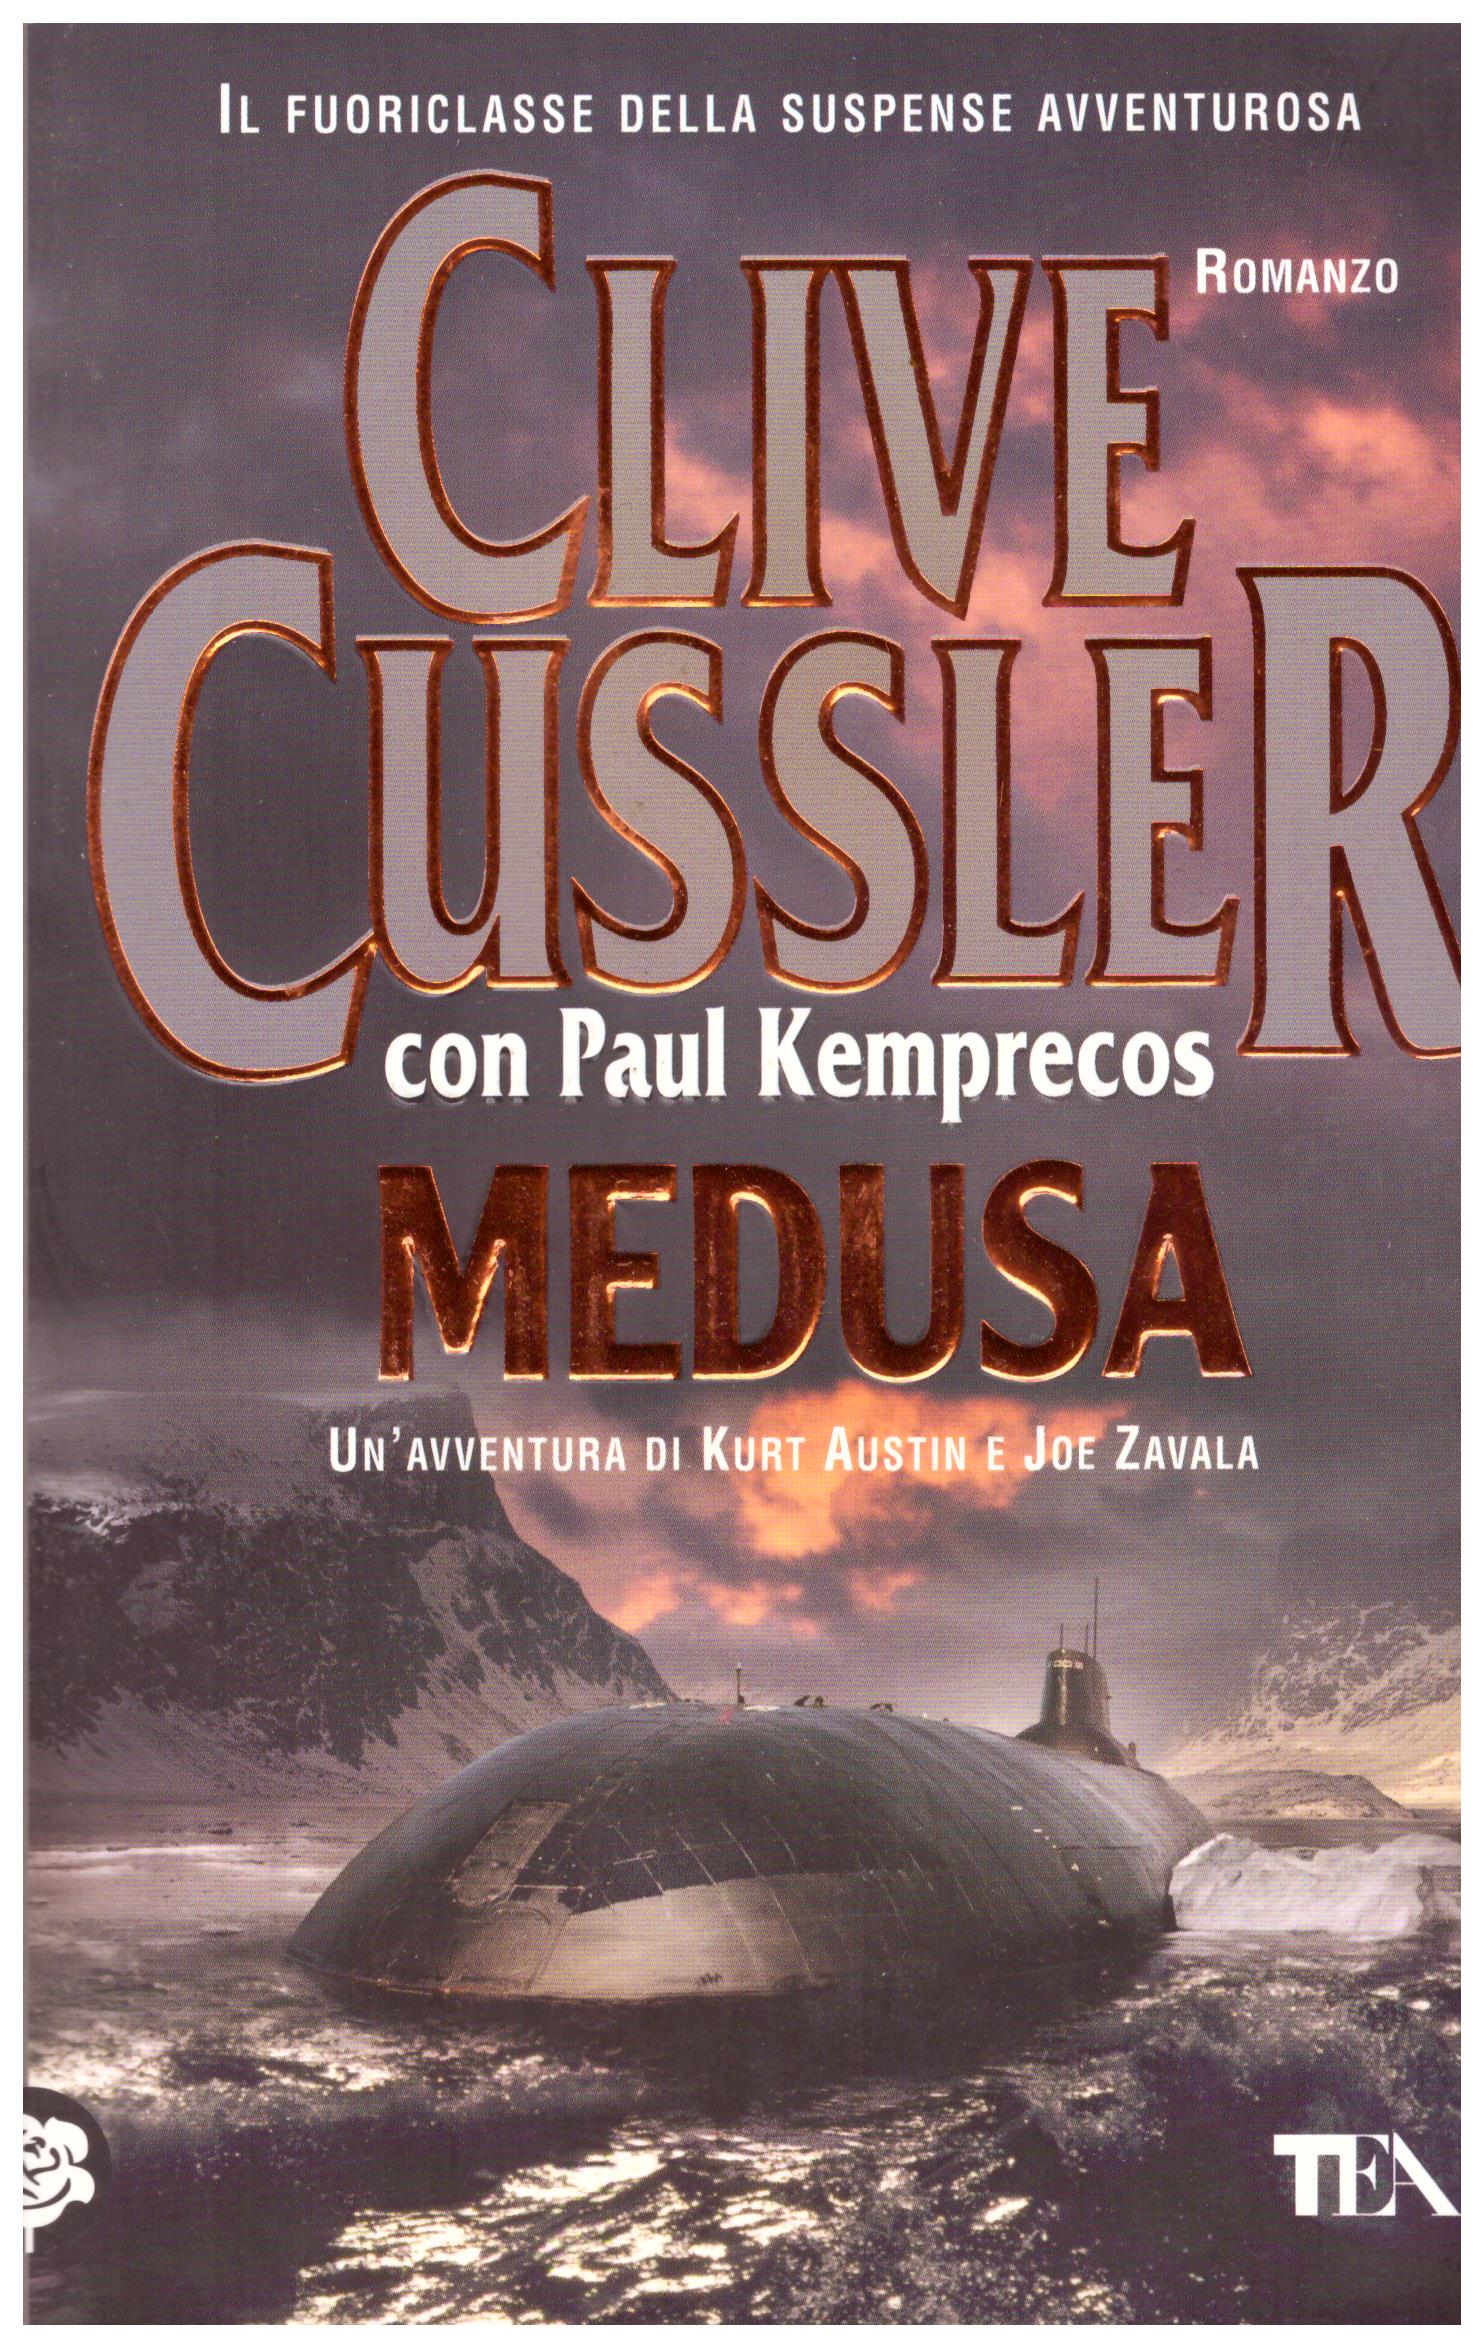 Titolo: Medusa Autore: Clive Cussler Editore: tea